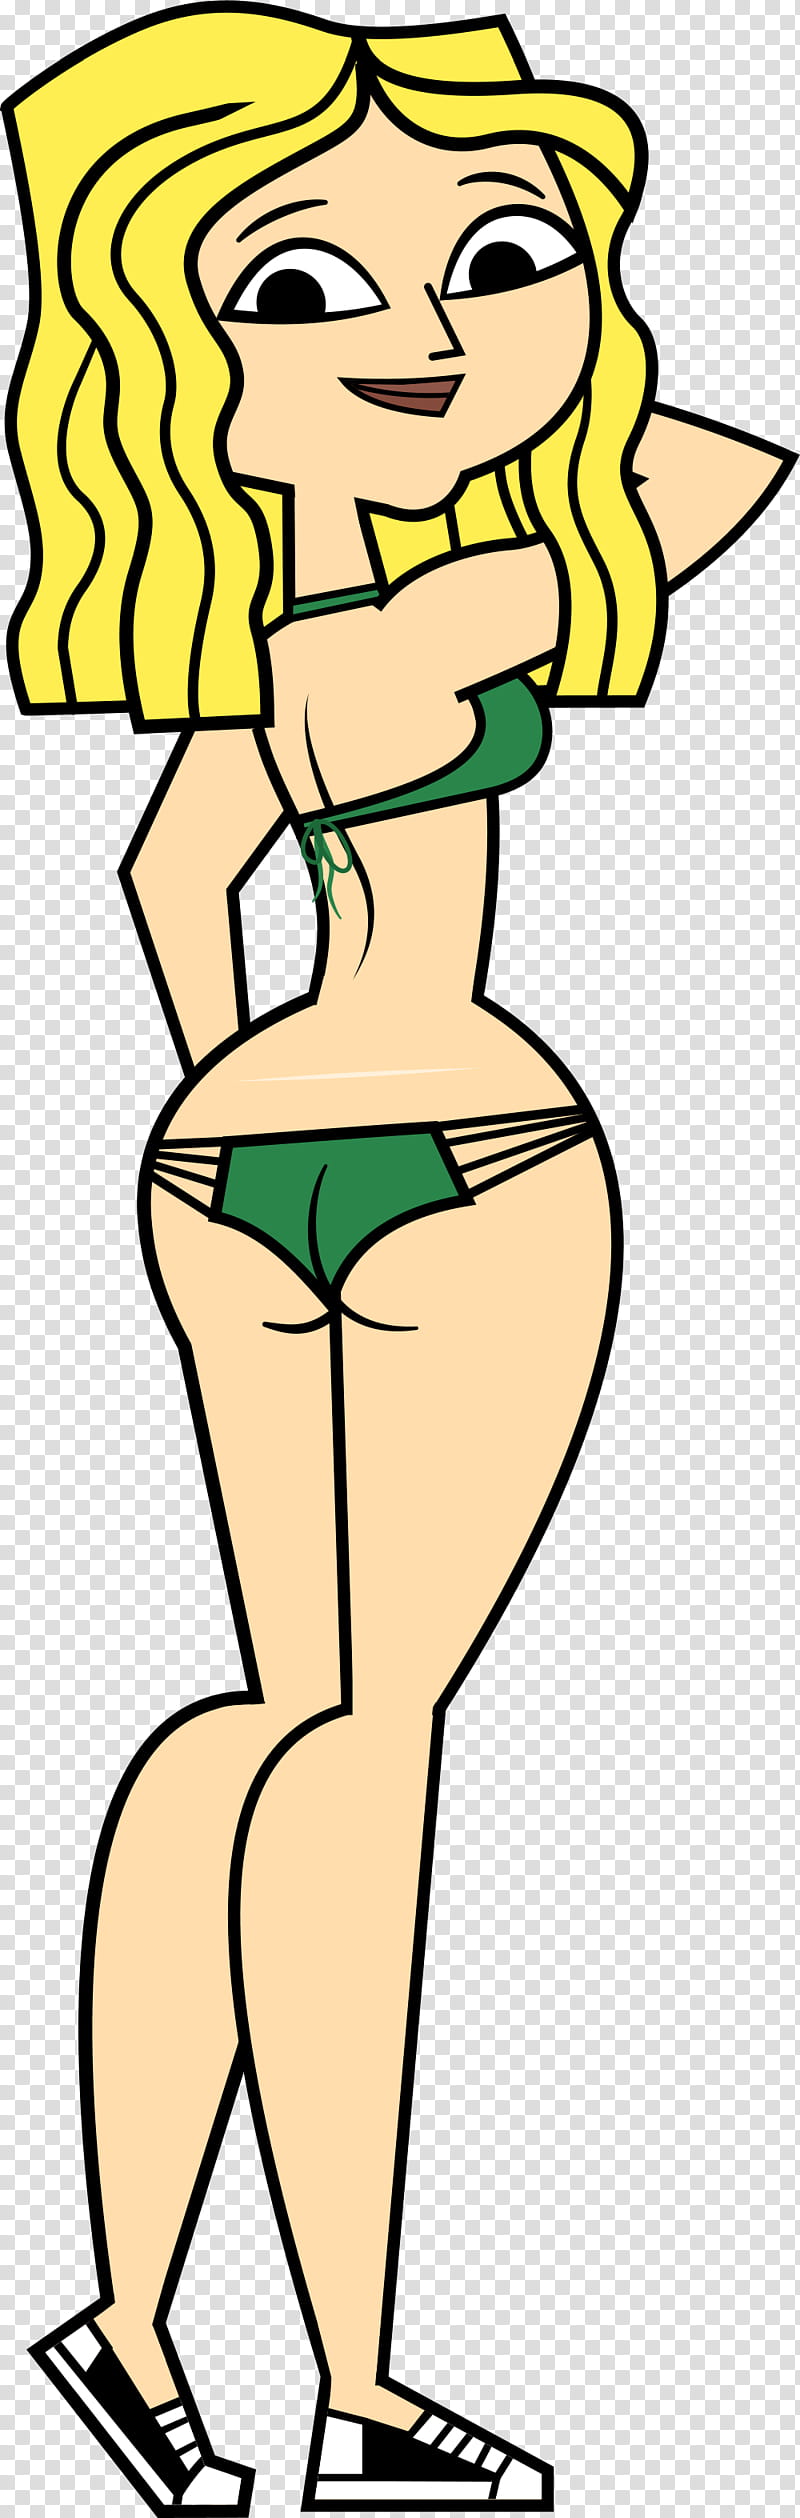 Carrie Bikini Back Pose, standing woman wearing green bikini illustration transparent background PNG clipart